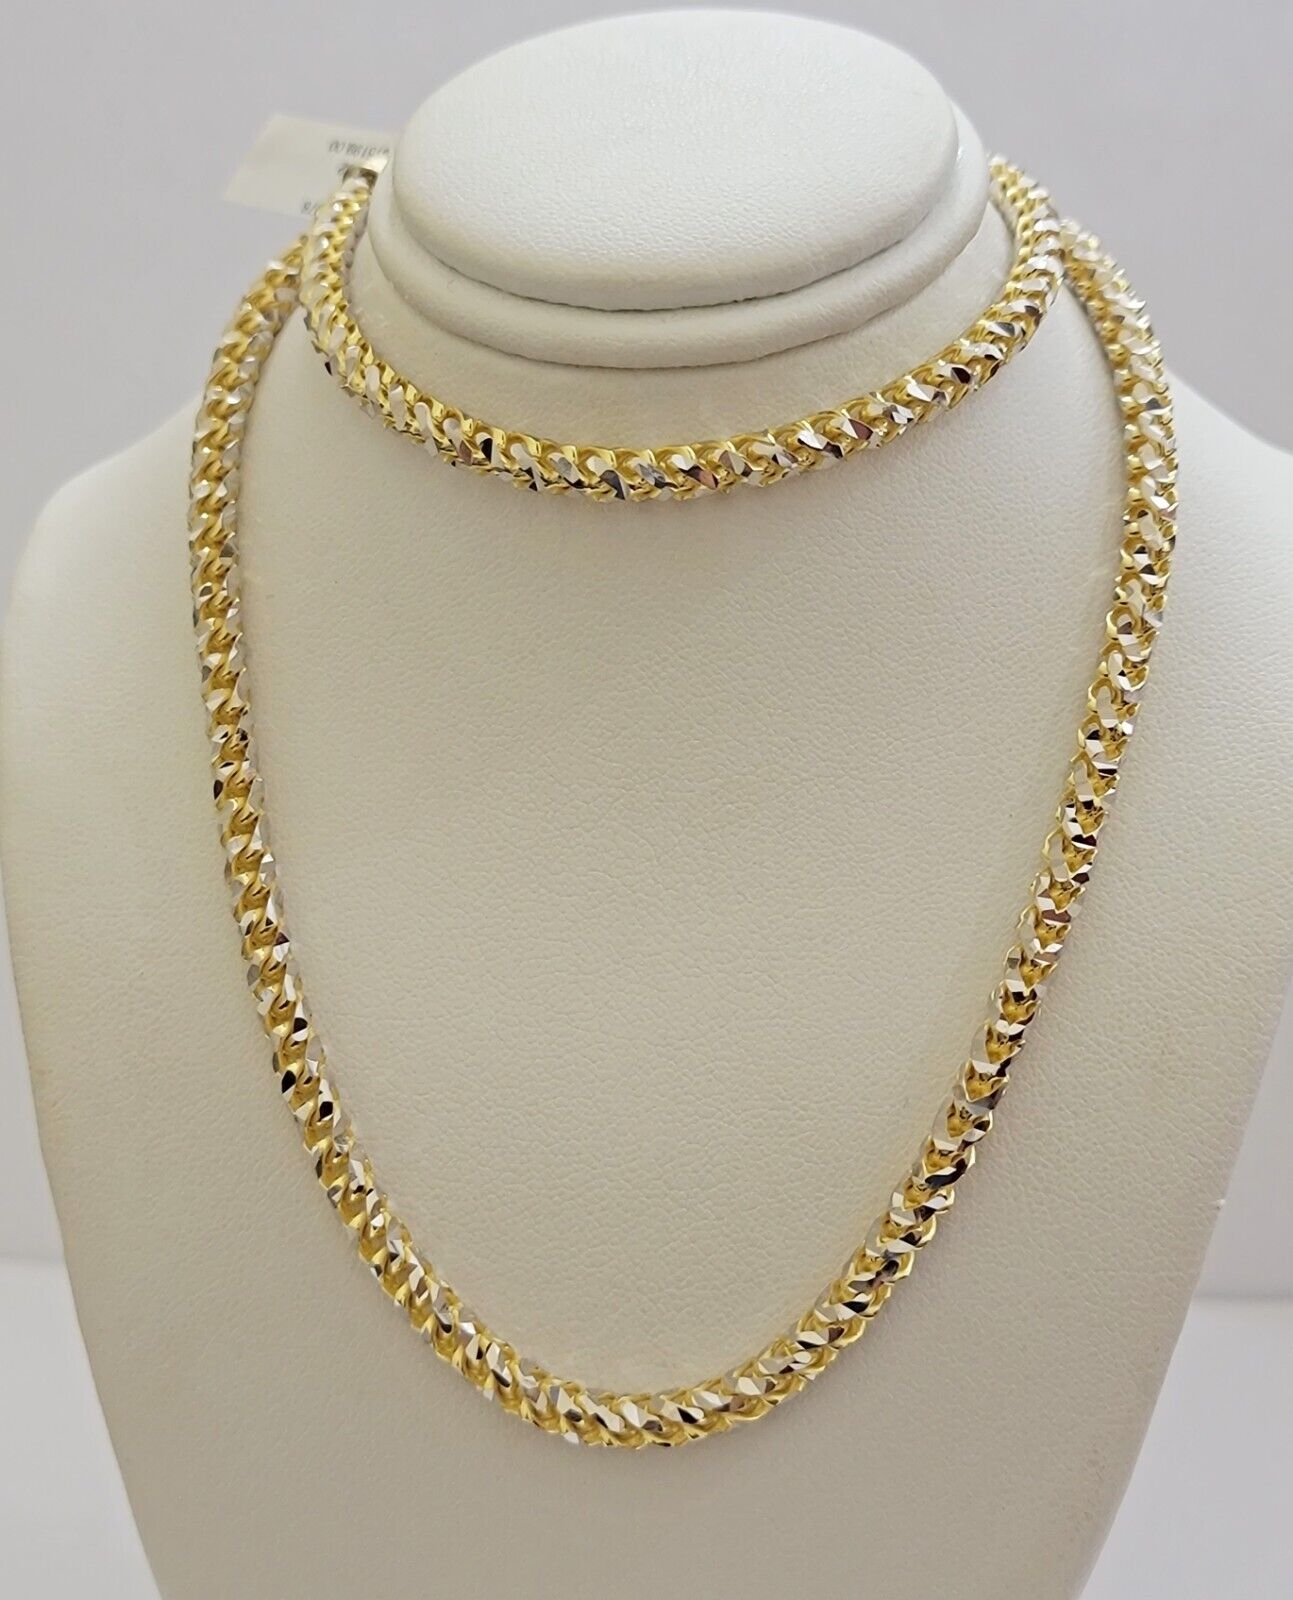 Real 10k Gold Solid Palm Chain Necklace Diamond cut 4.5mm 24" 10kt Unique Design